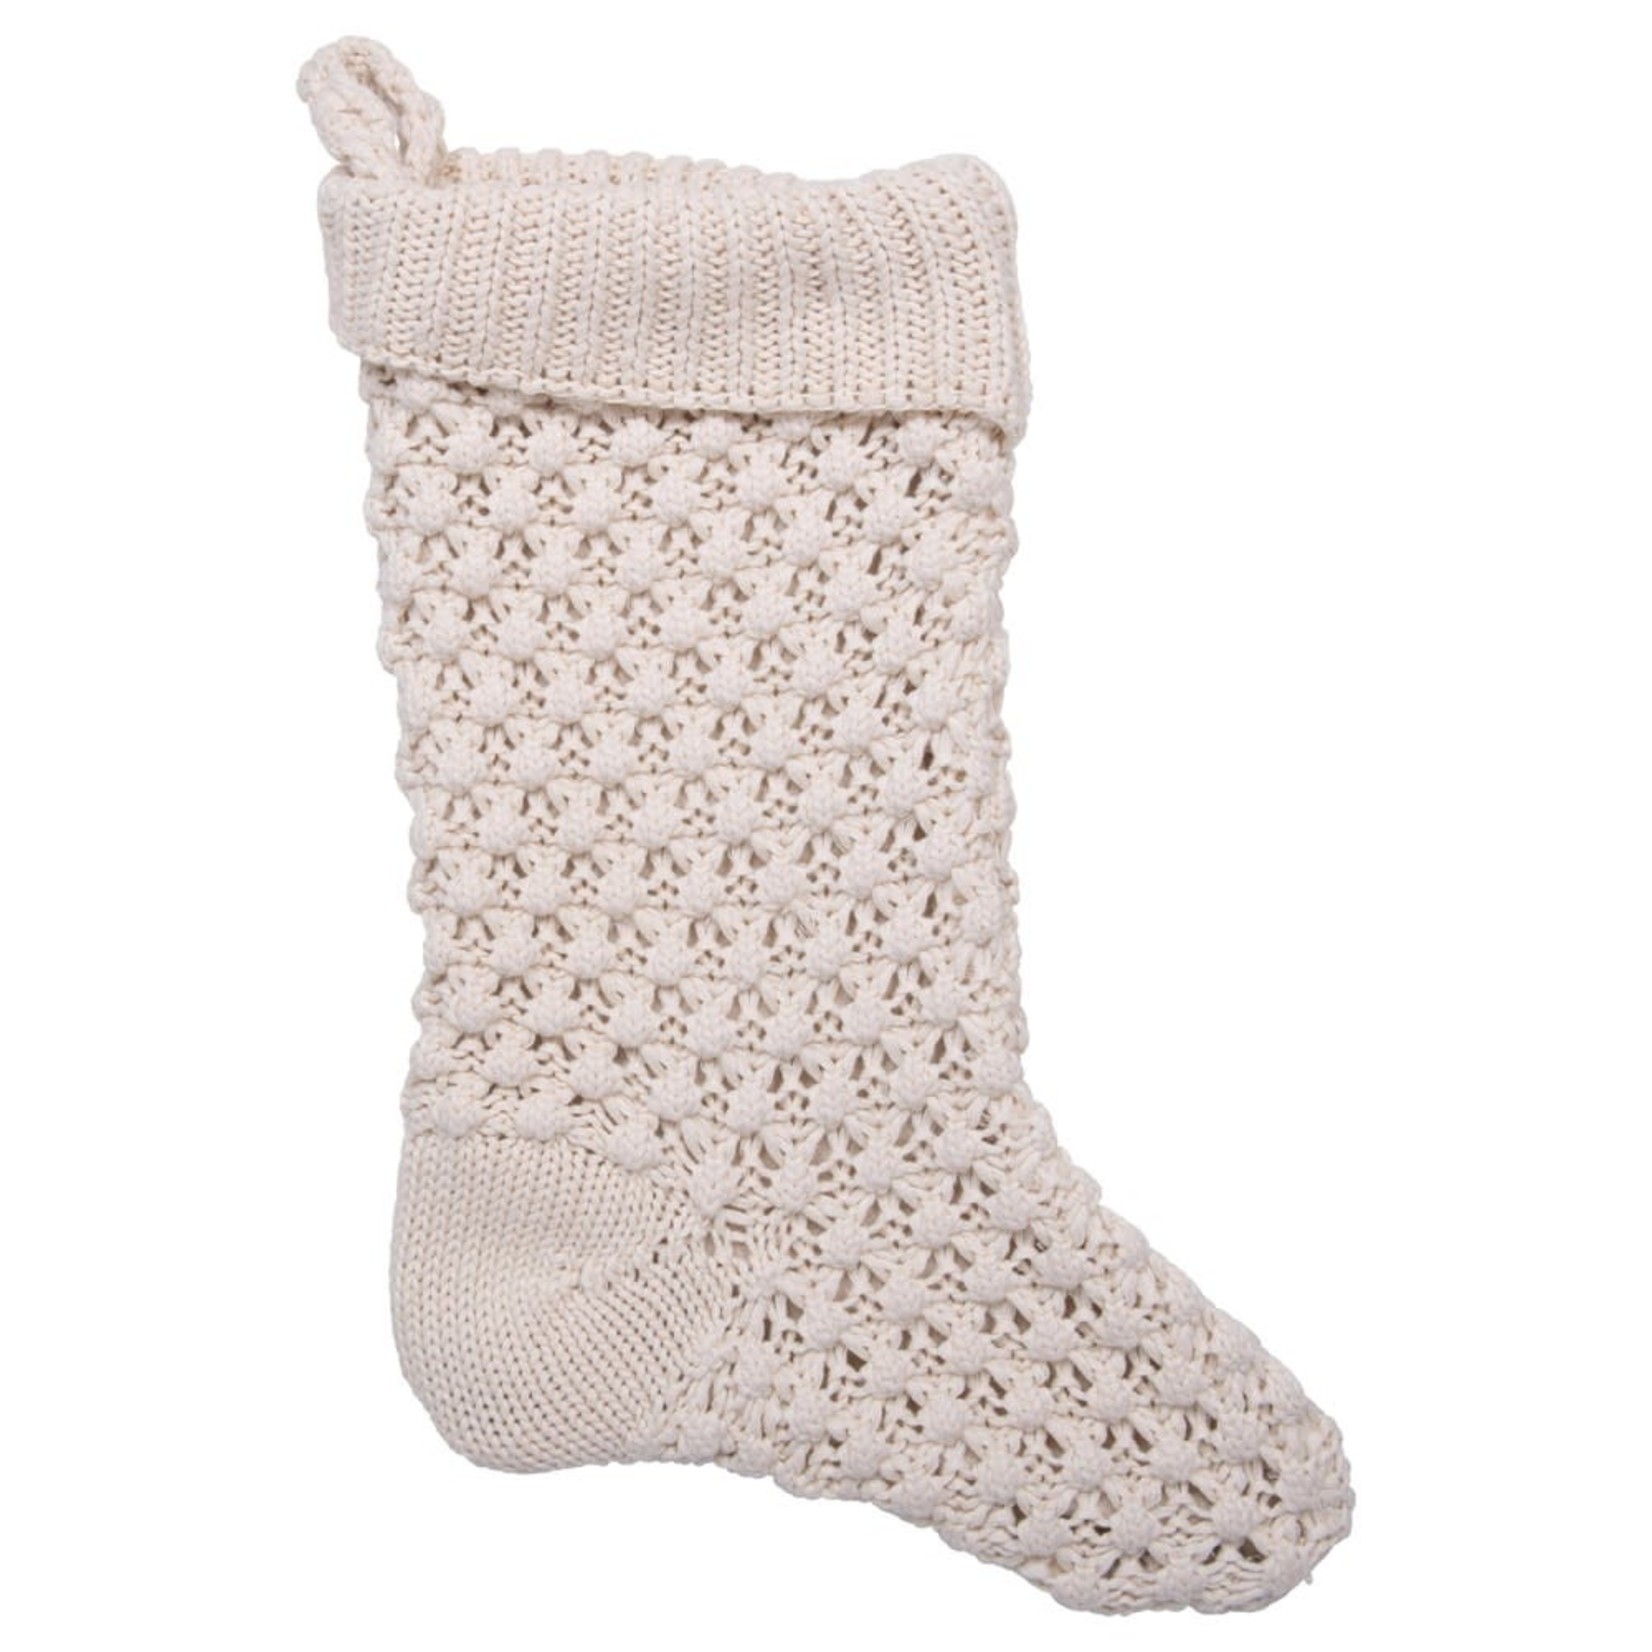 Cotton Knit Stocking, Cream Color